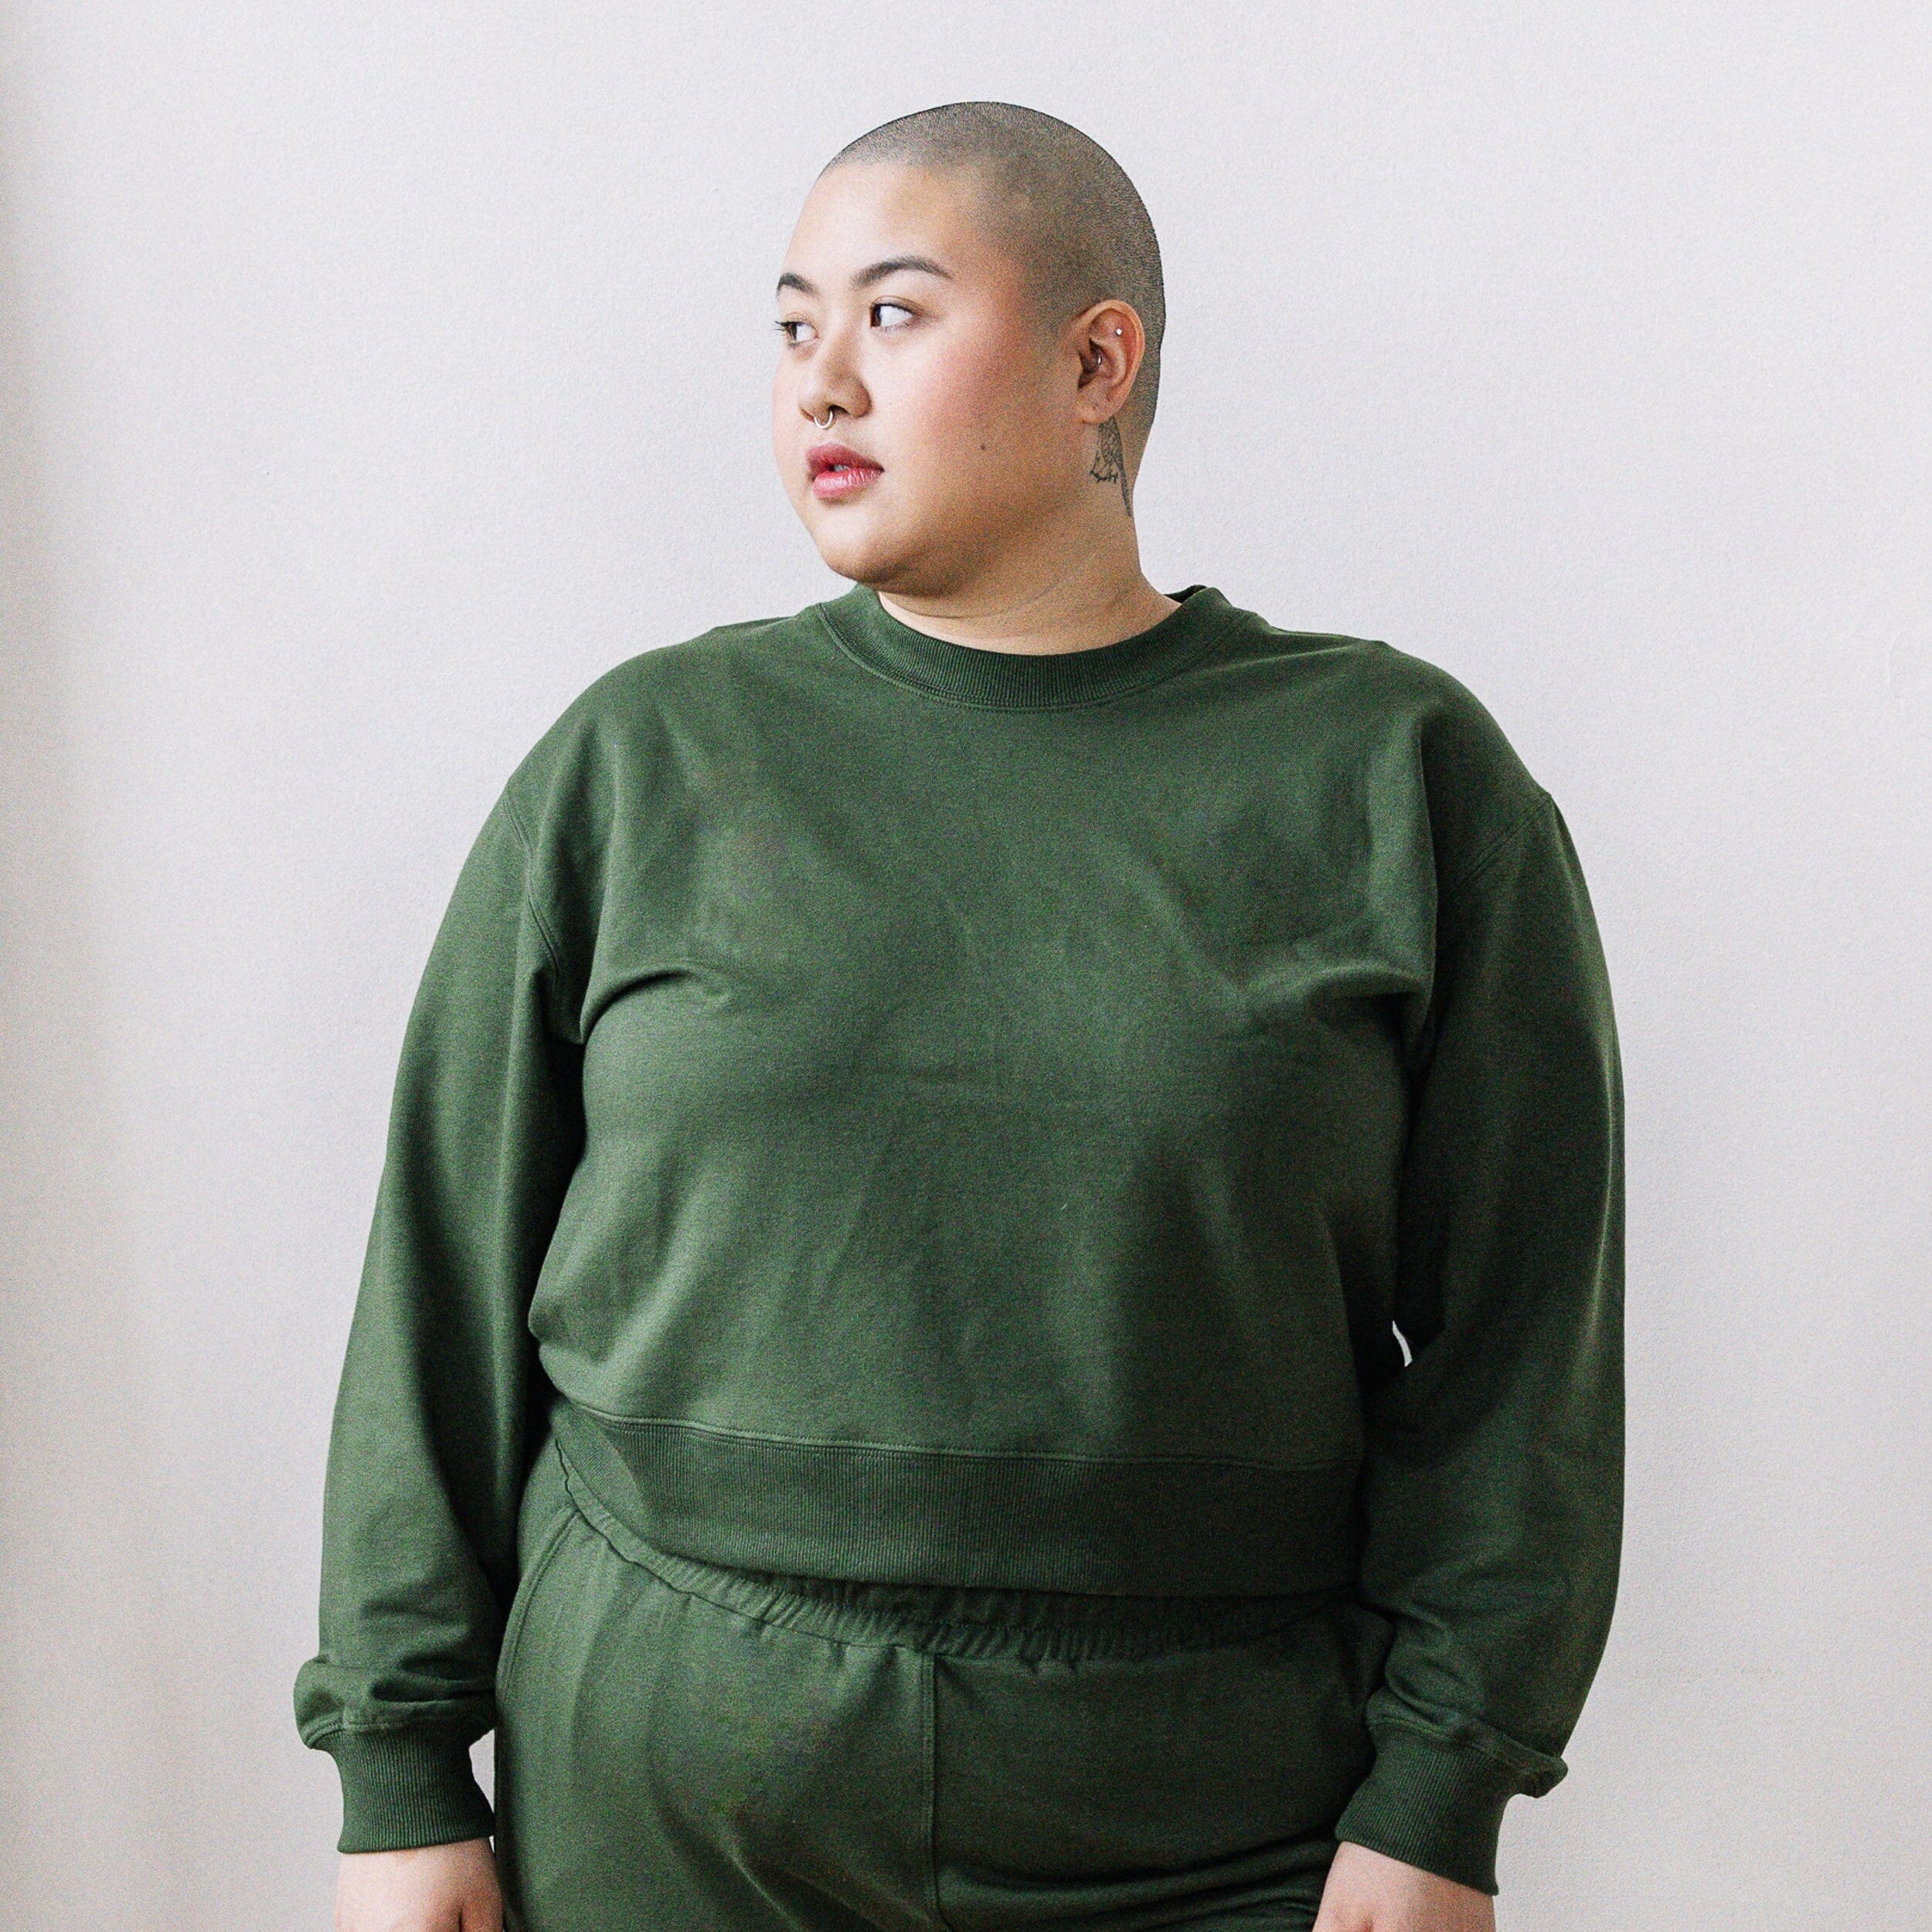 The Lightweight Cropped Crew Sweatshirt | FRANC Sustainable Clothing